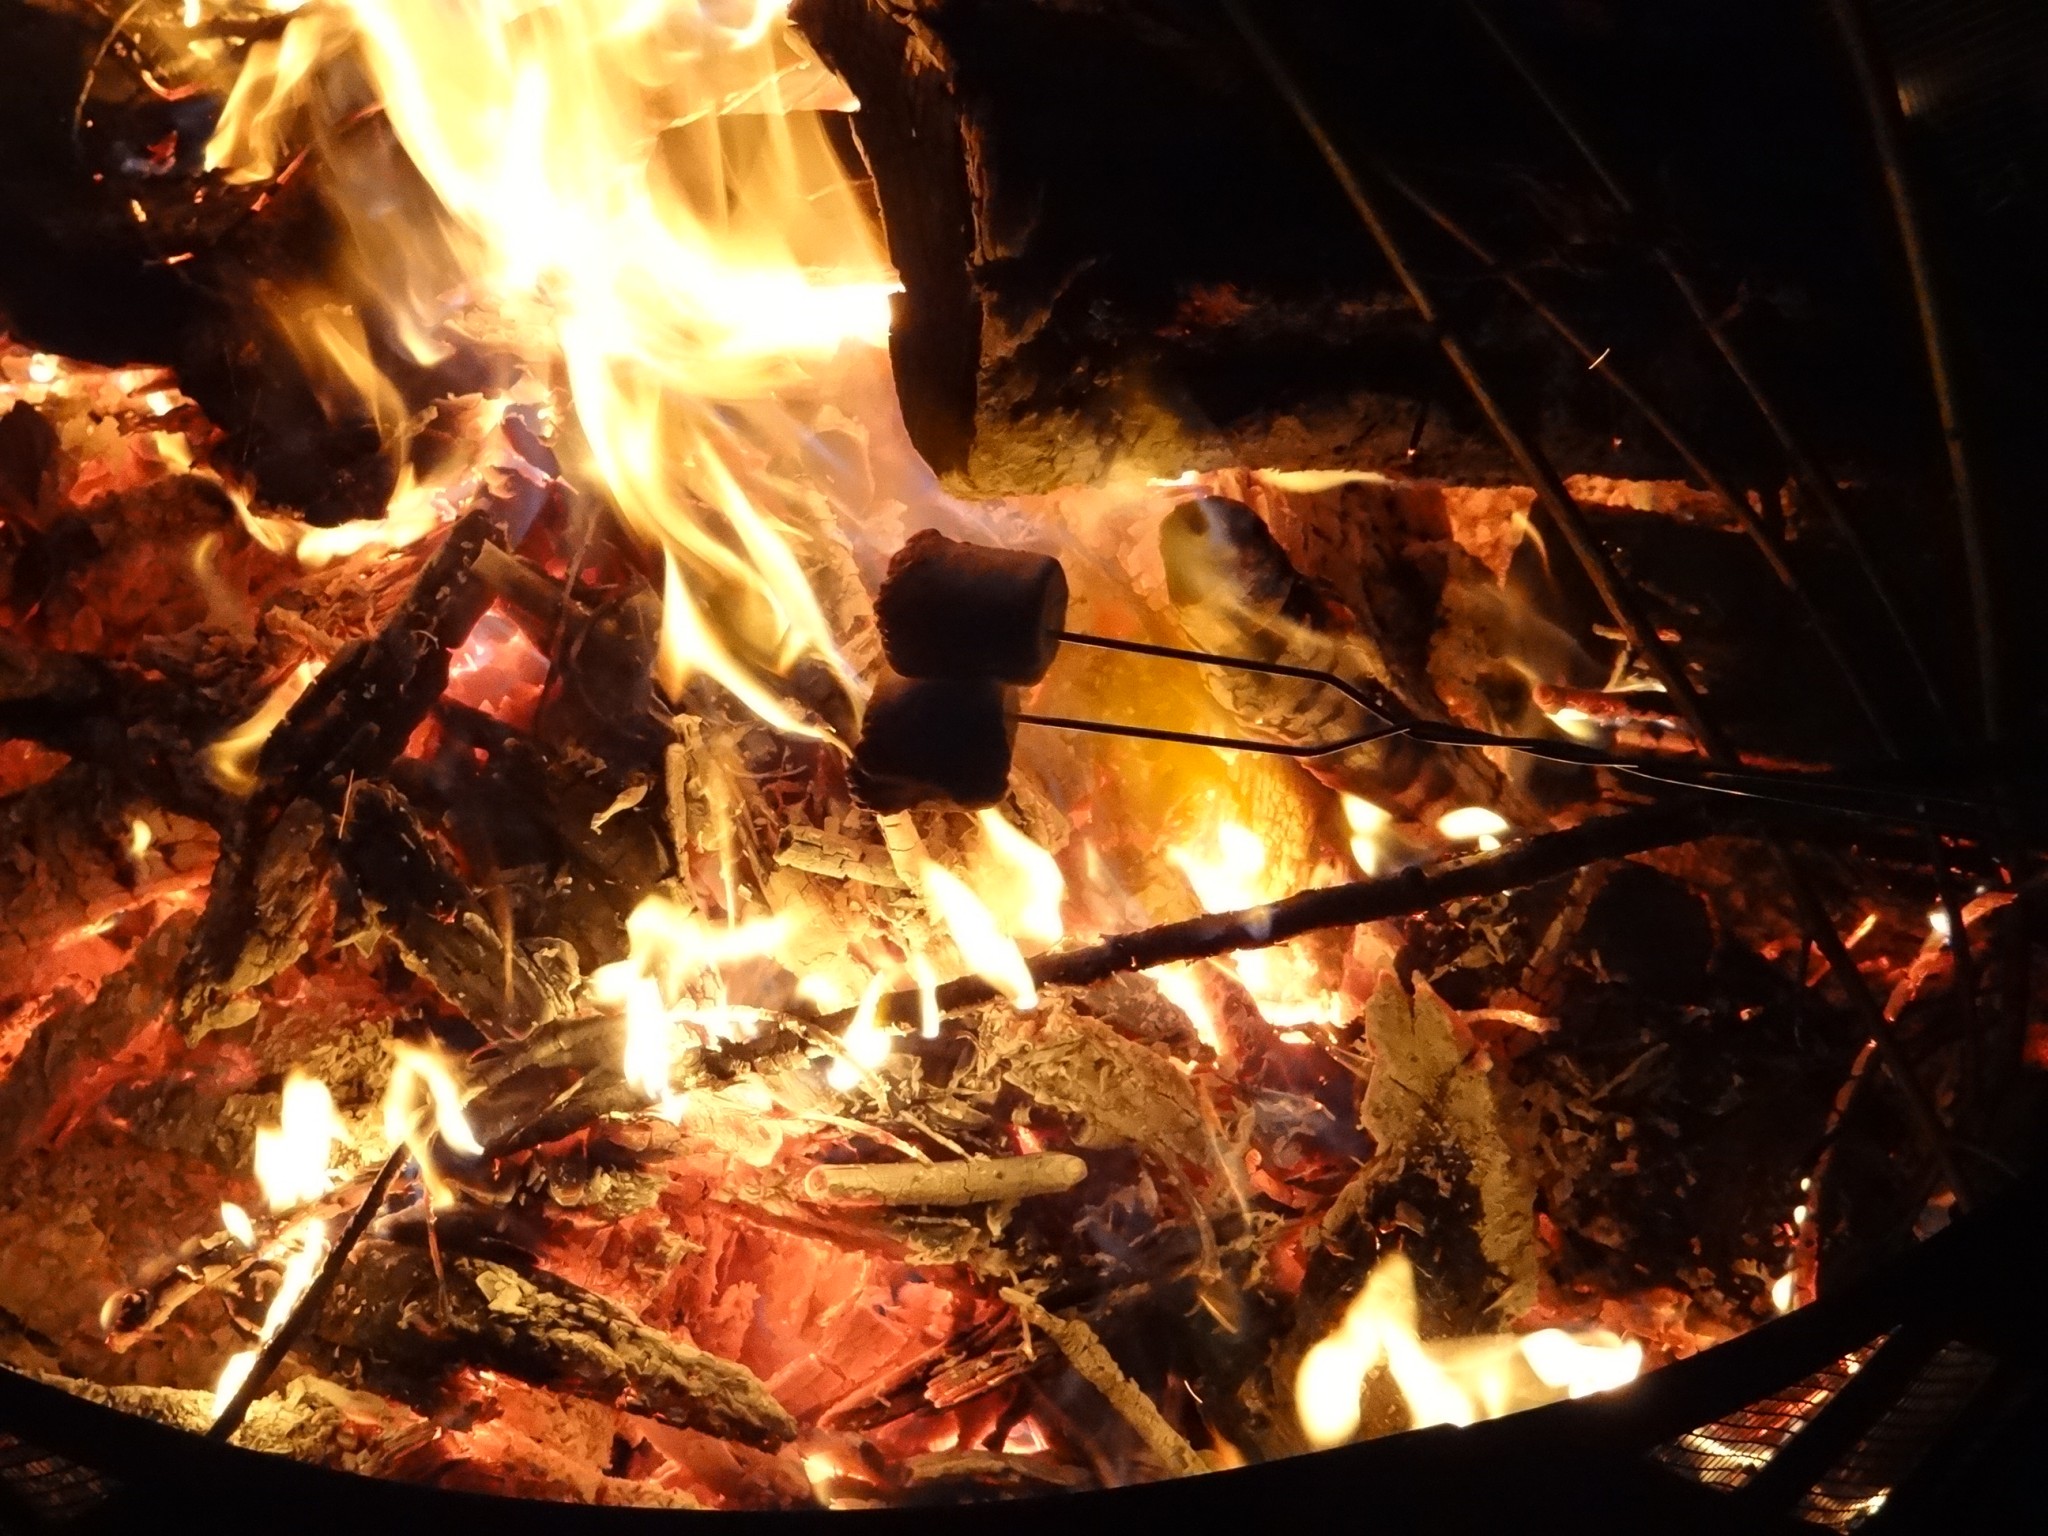 campfire3